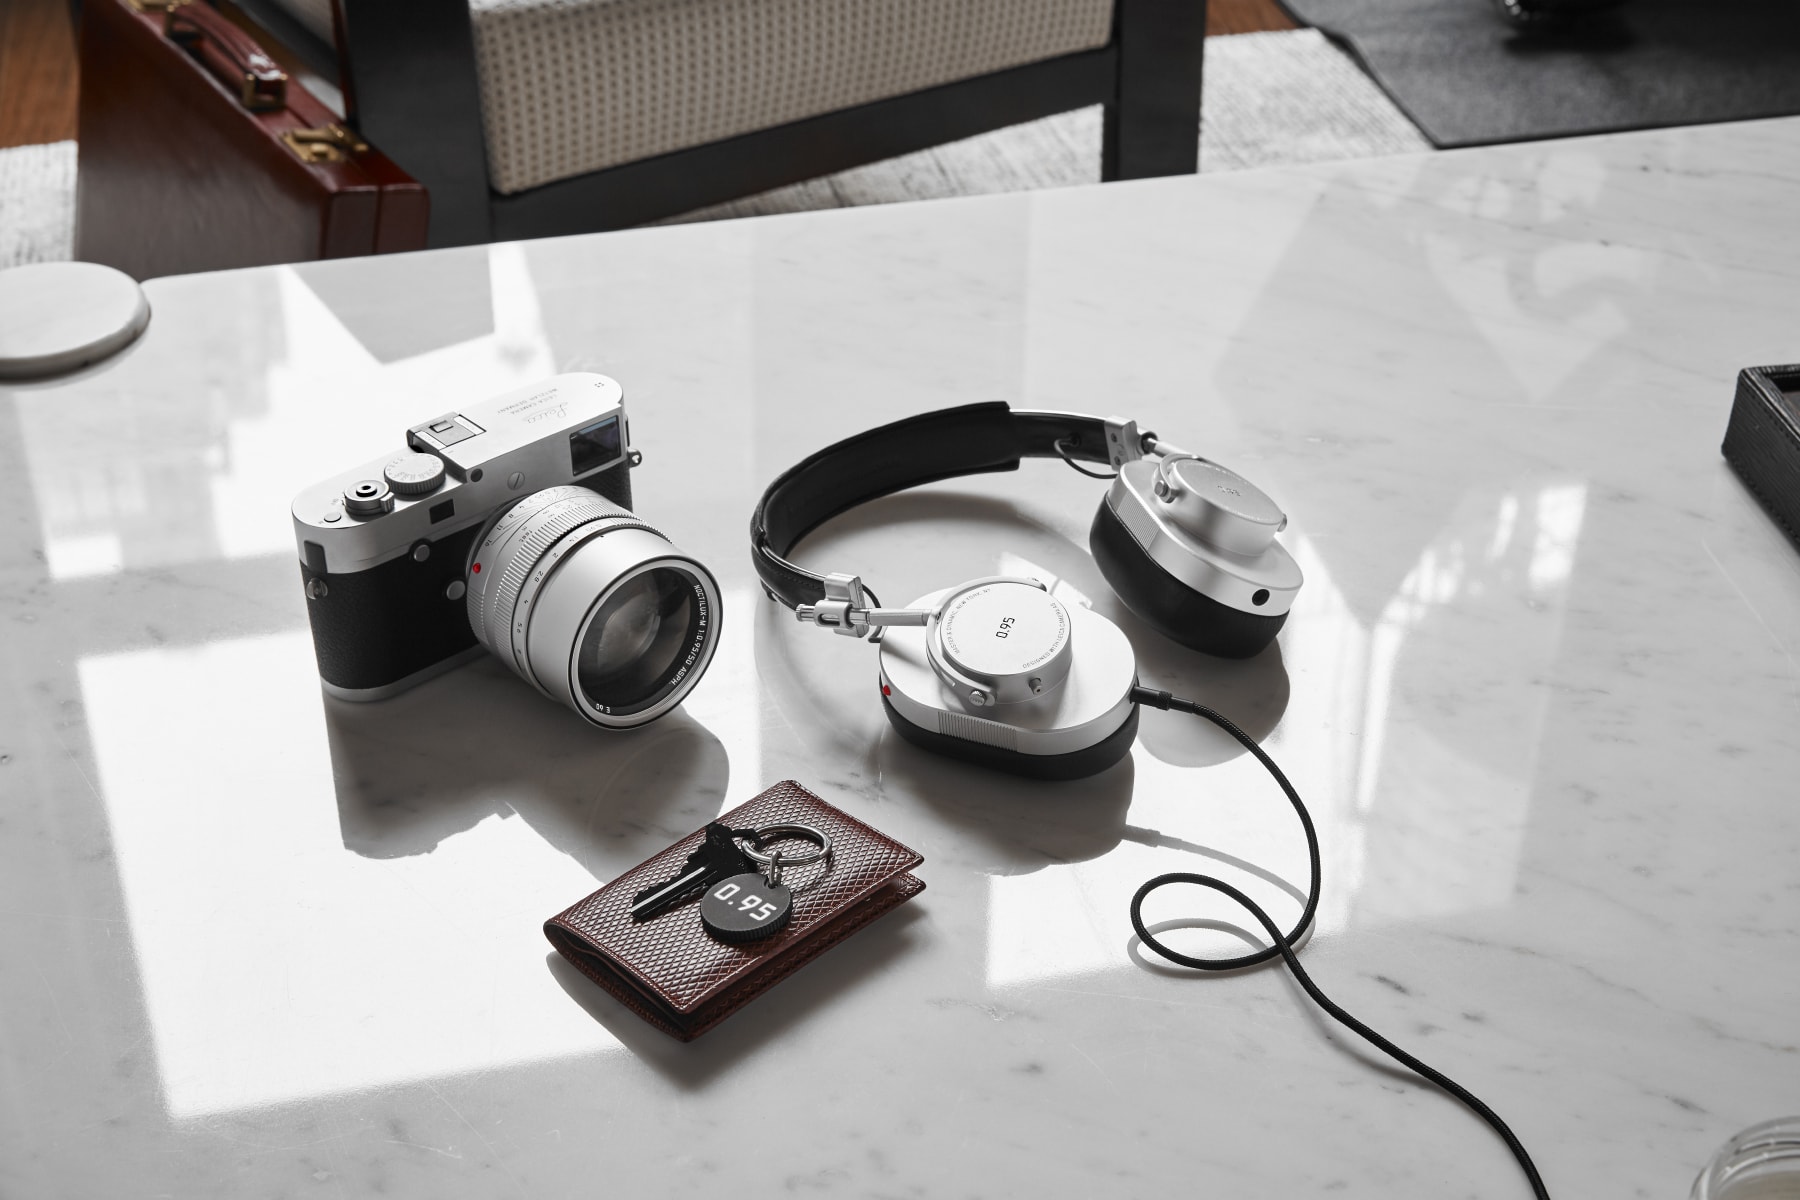 Leica Master & Dynamic 0.95 Silver Collection Headphones Cameras Leica Audio Music